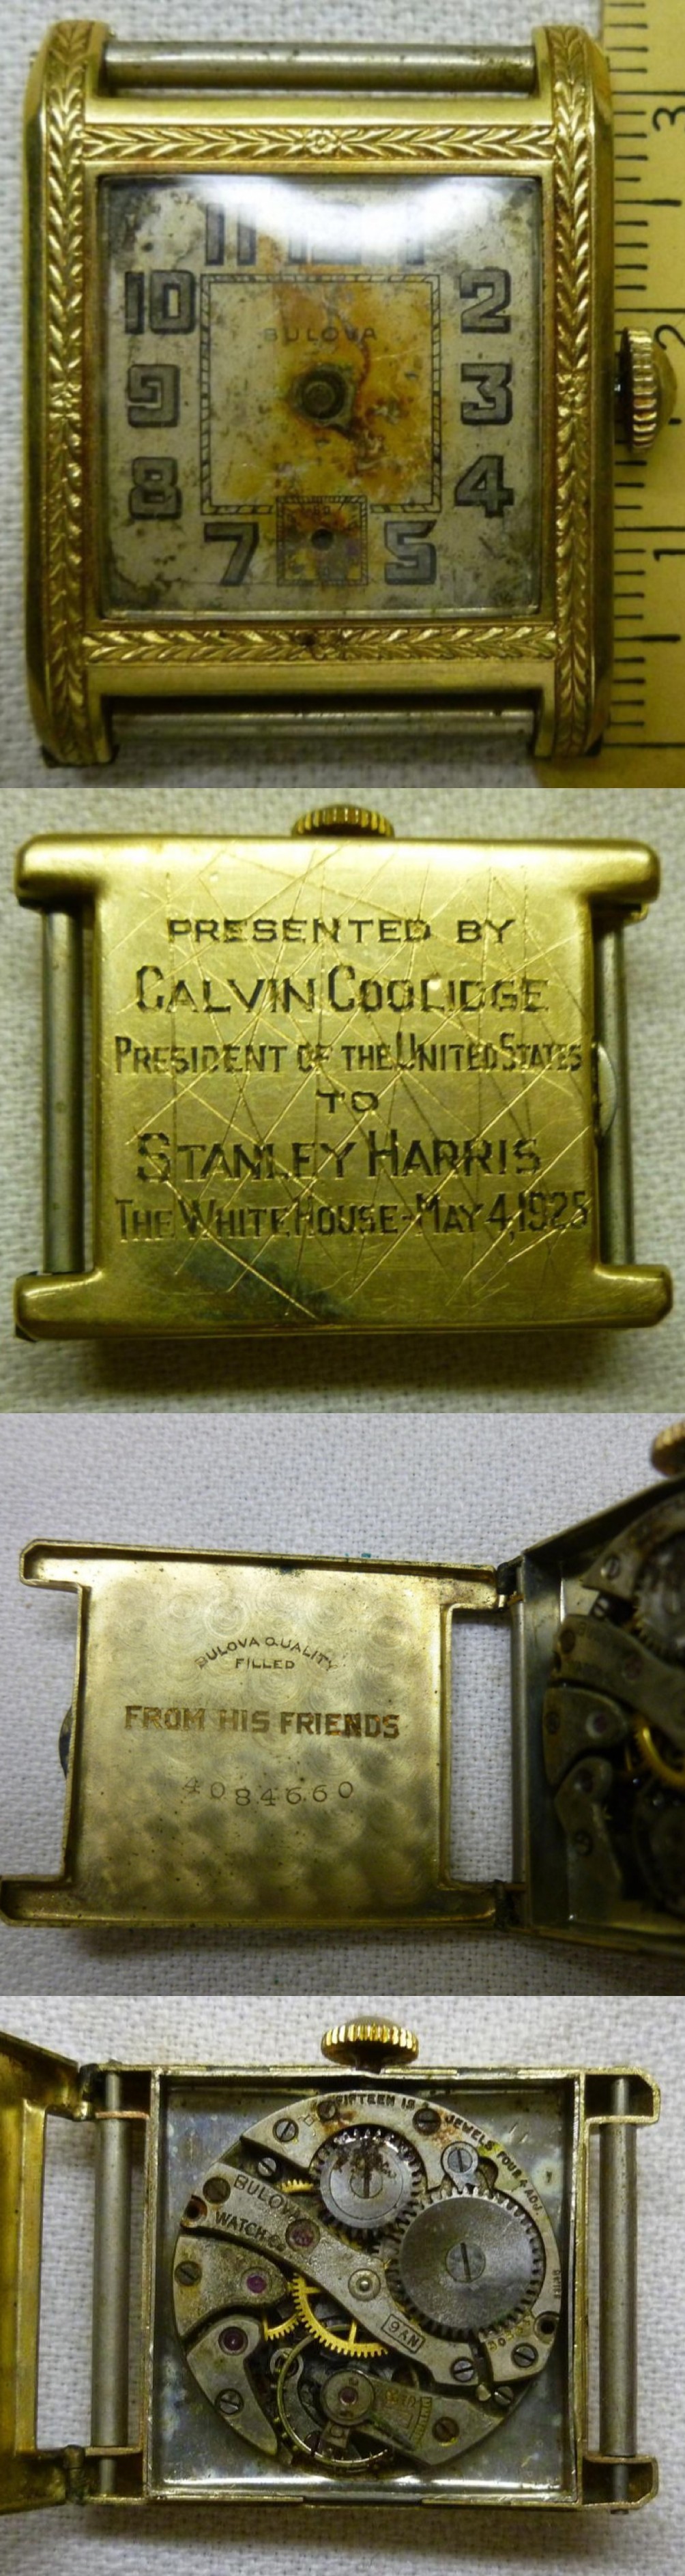 1925 Bulova Executive watch - Stanley Harris / President Coolidge